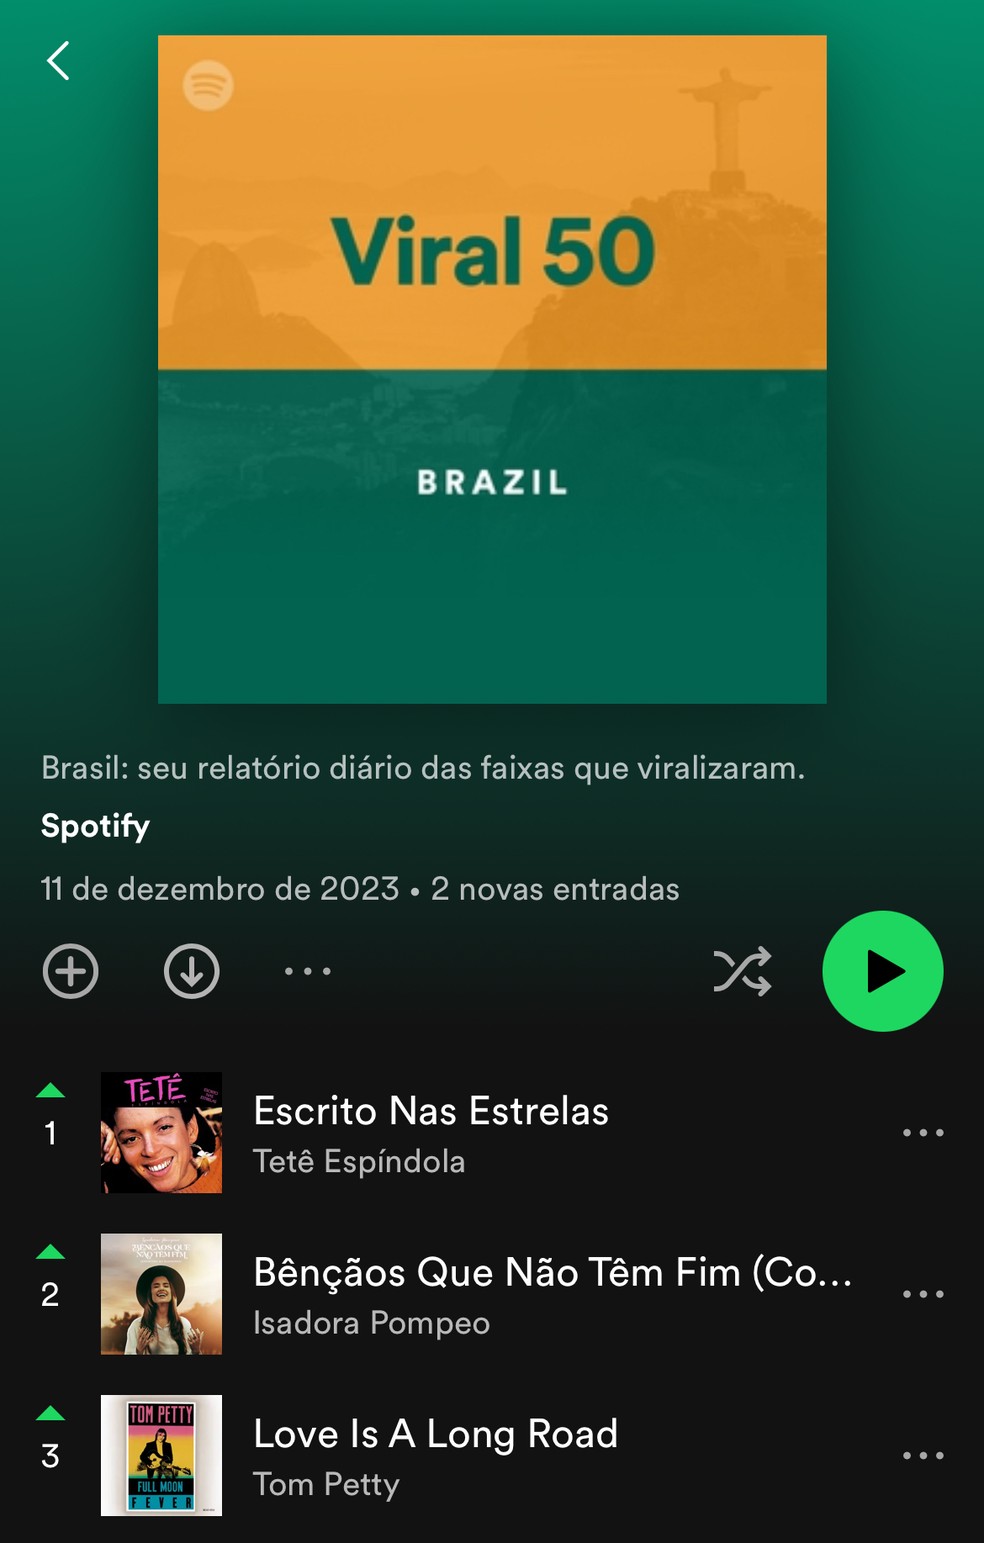 Jão - Top 3 nas 50 virais do Brasil no Spotify